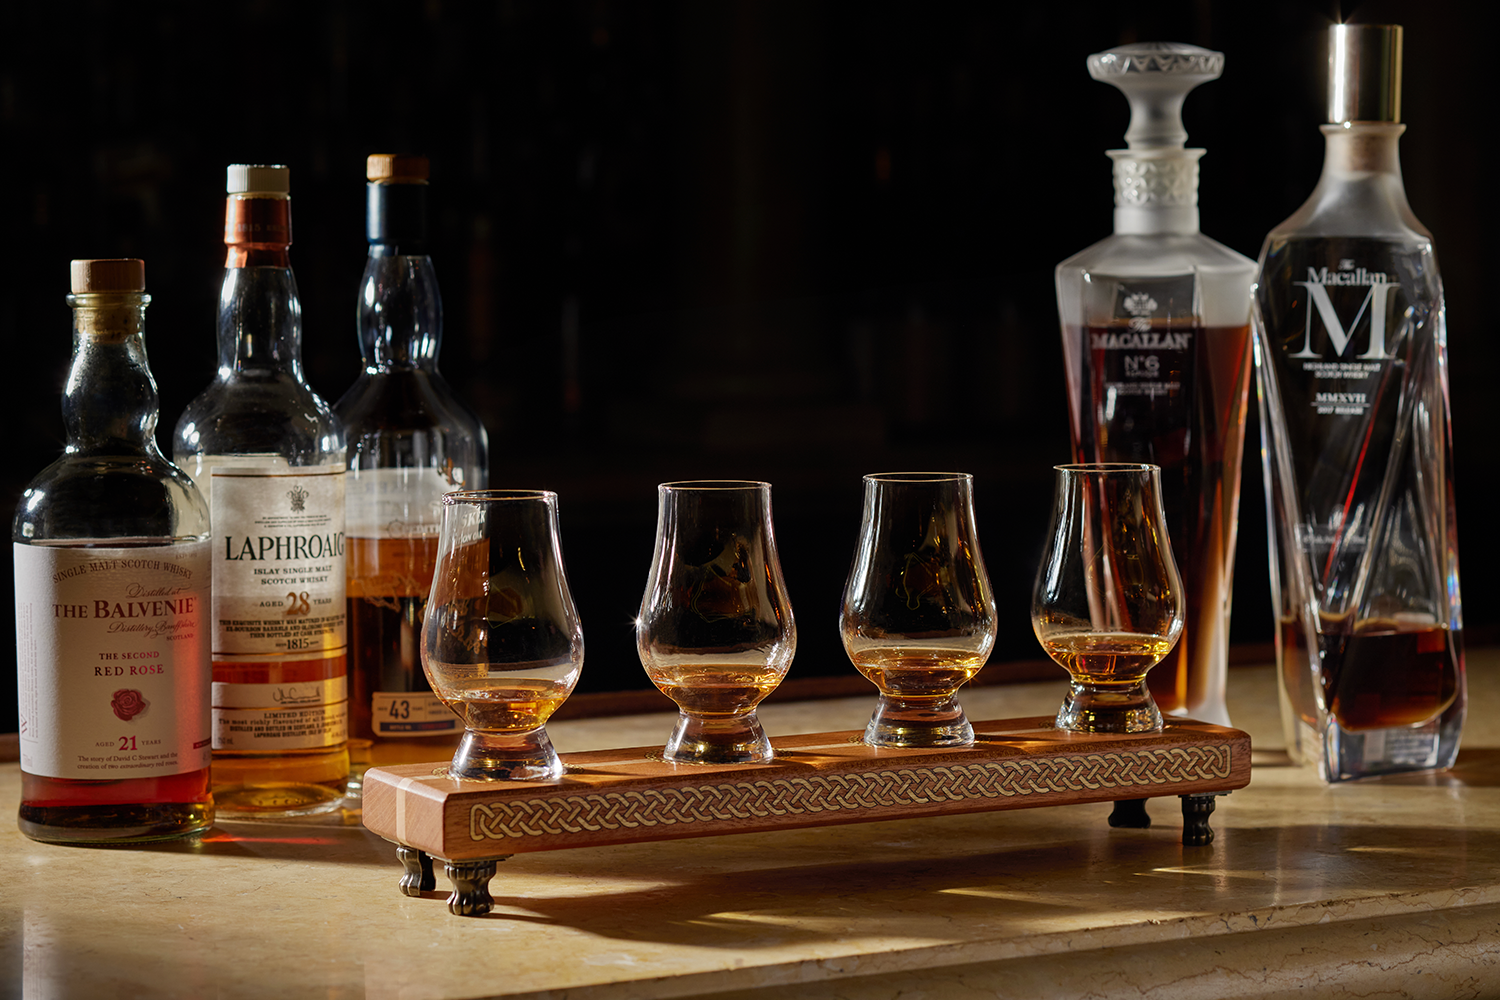 The Inn at Little Washington boasts a world class whiskey program befitting of its existing bonafides